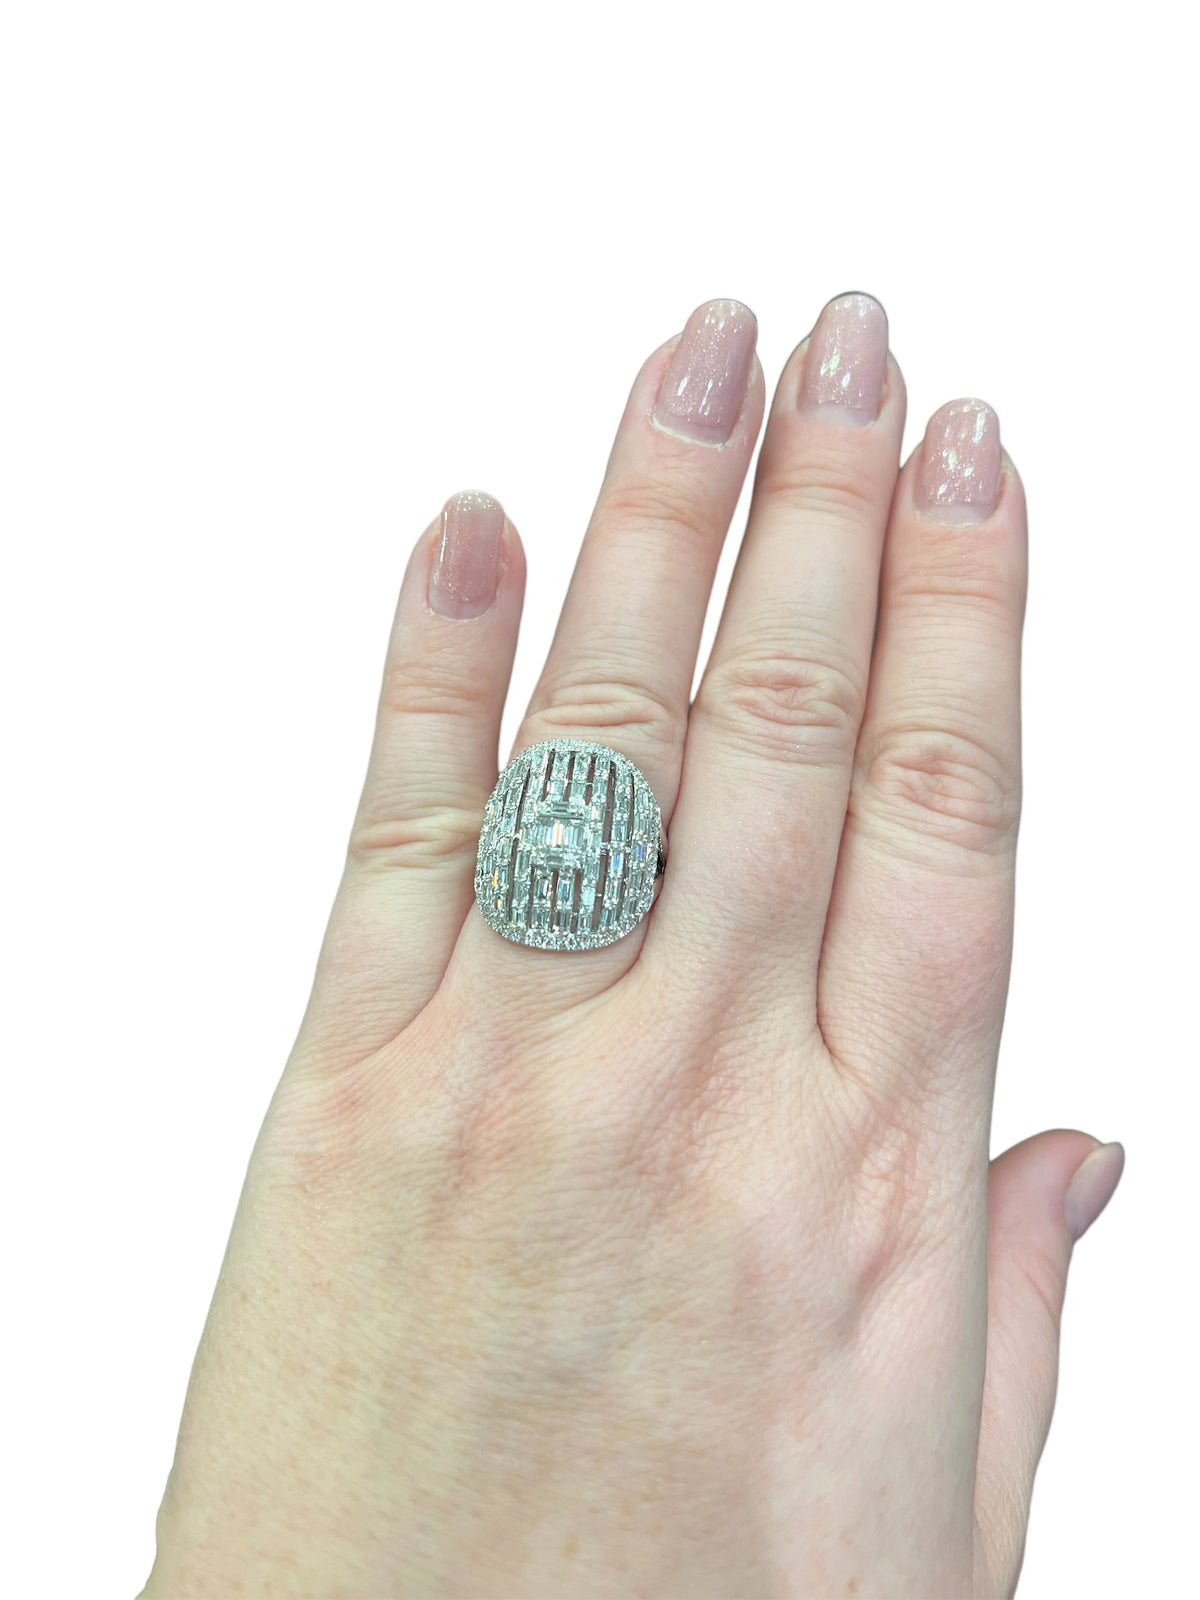 14K White Gold Diamond Ring - size 6.5